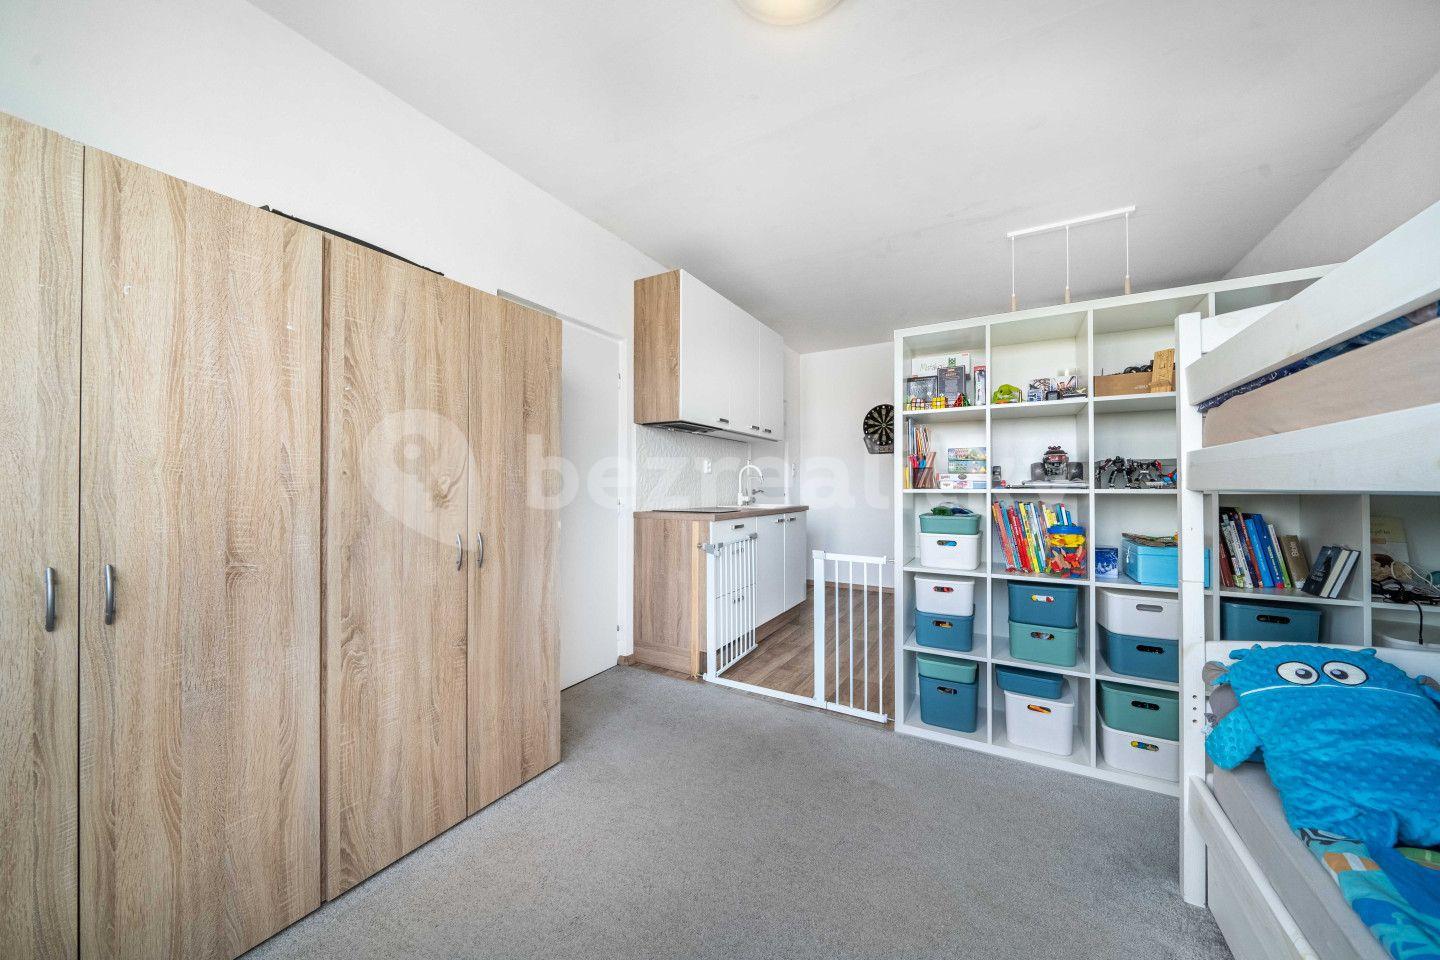 1 bedroom with open-plan kitchen flat for sale, 39 m², Žlutická, Plzeň, Plzeňský Region